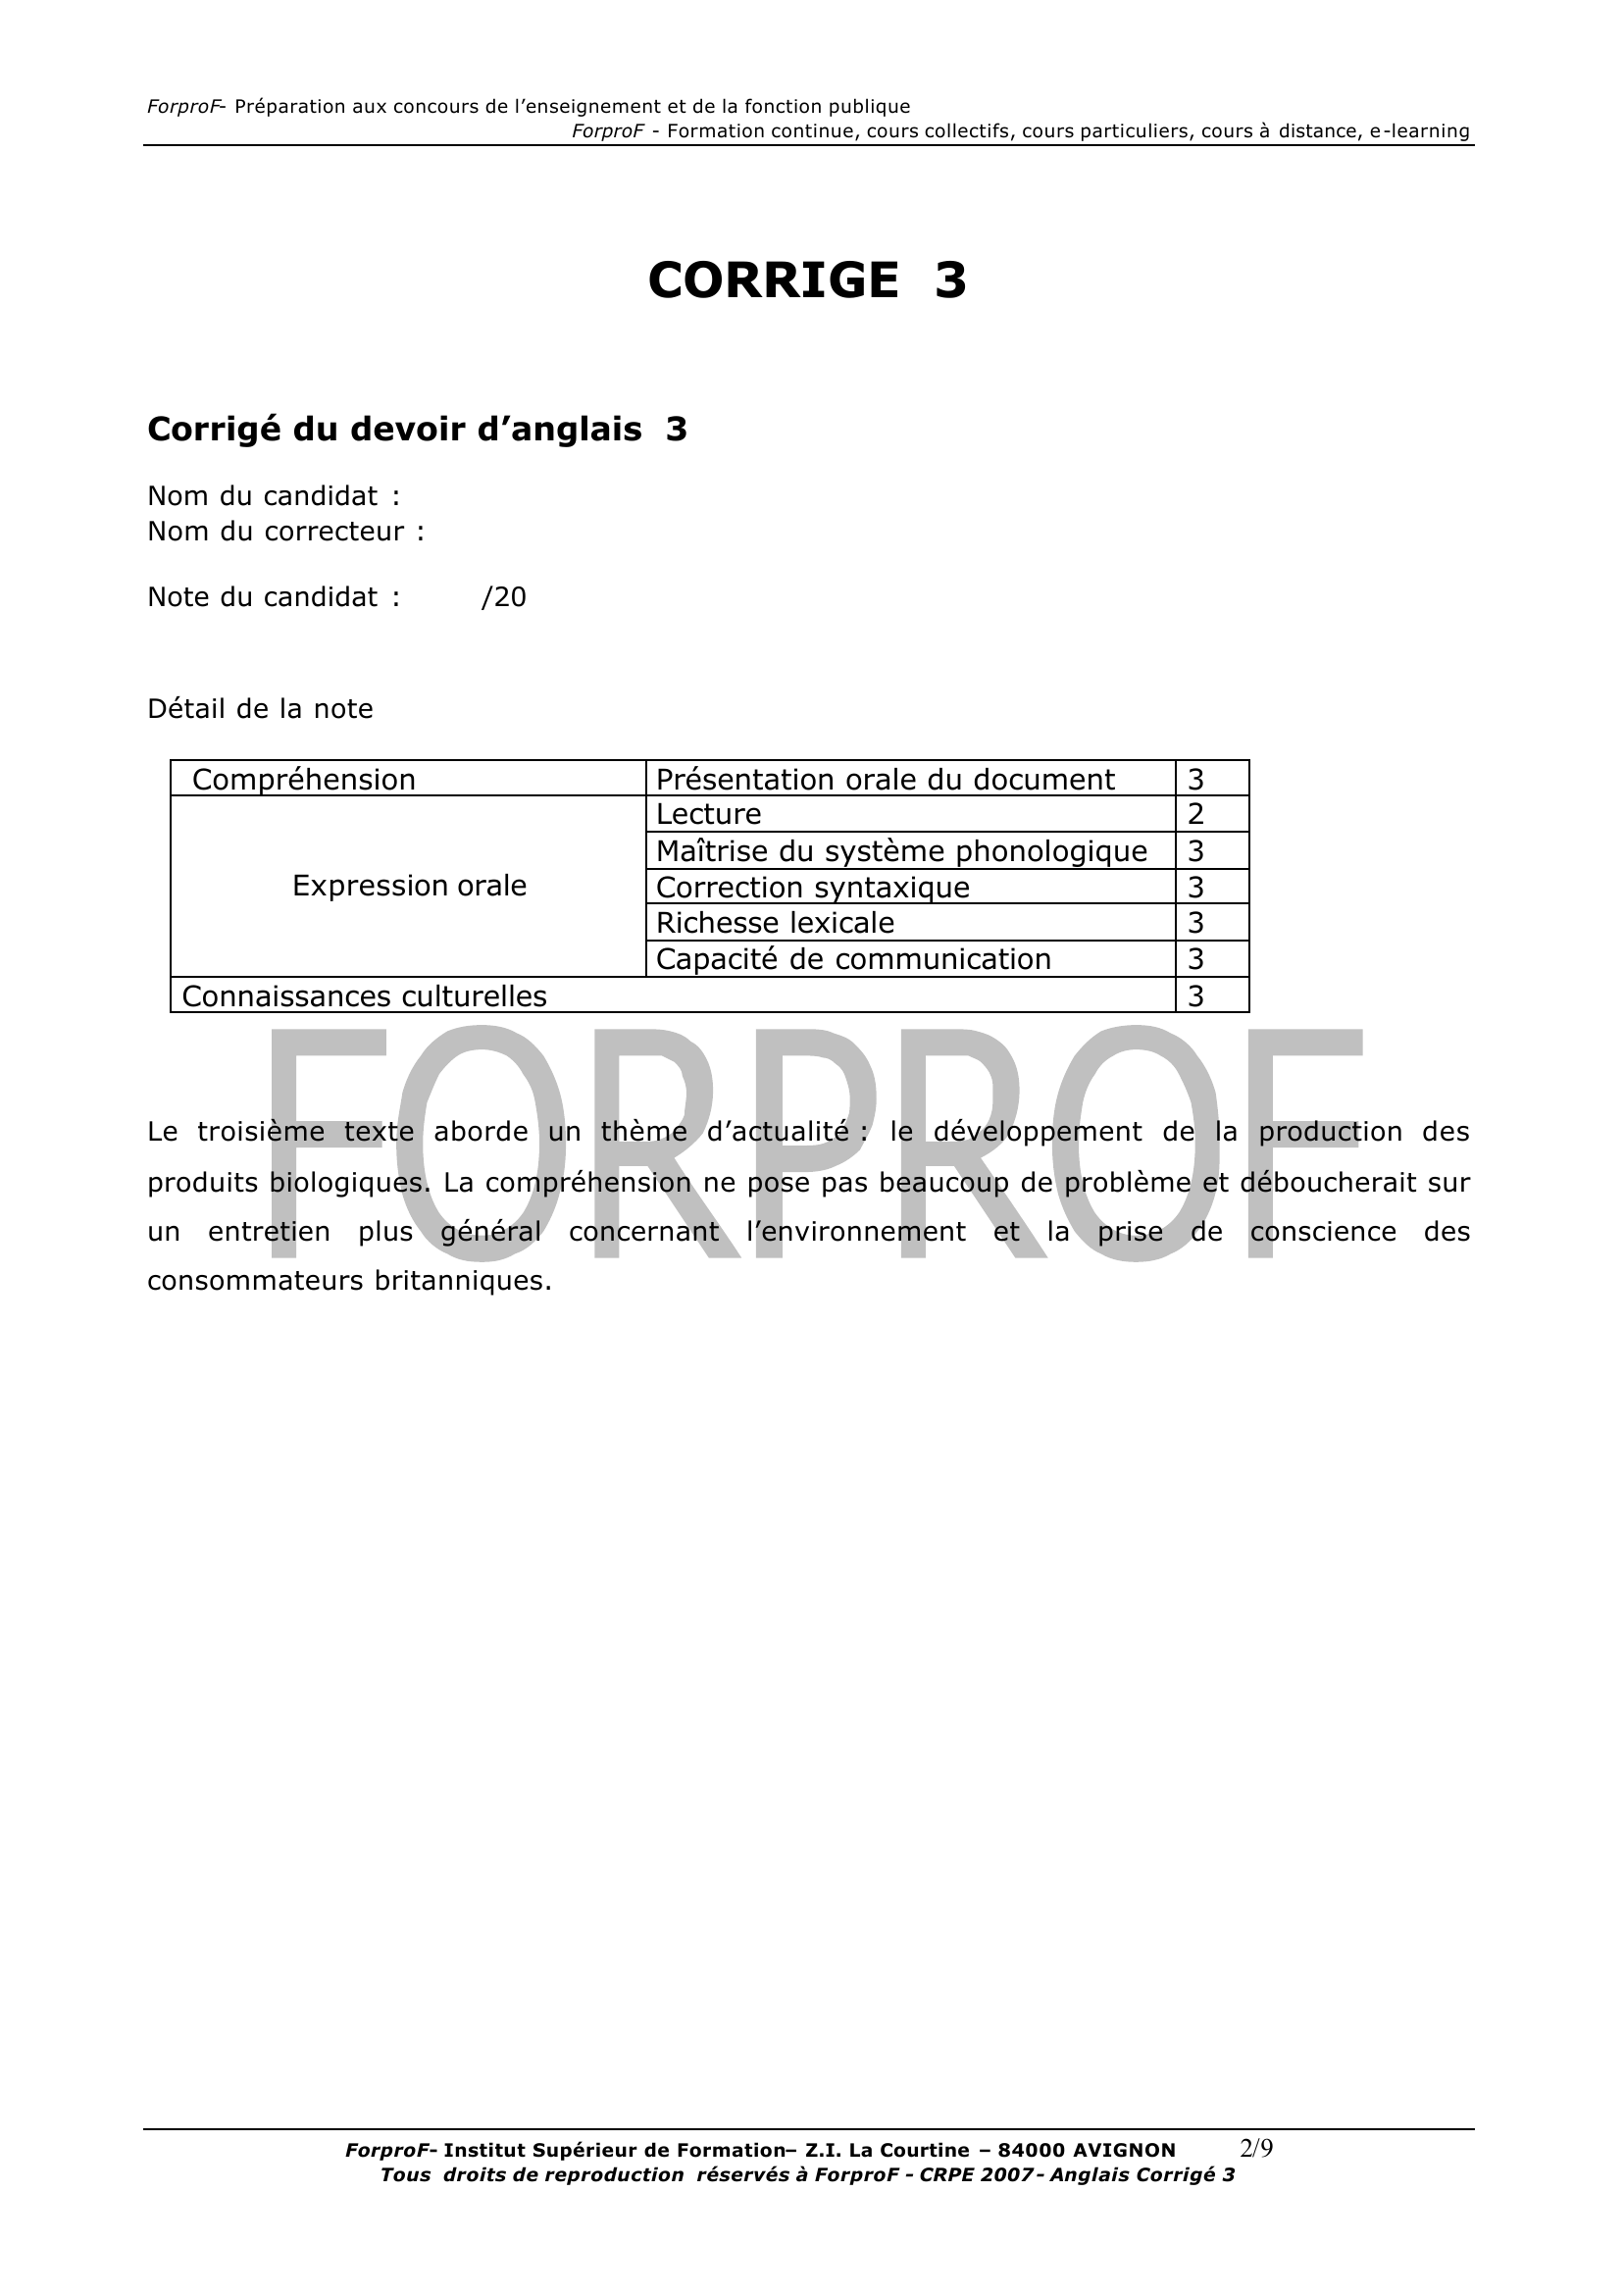 Prévisualisation du document CRPE SESSION 2007

ANGLAIS
Corrigé 3

Réf: CRFDAng - CRAng - CRFDAng2

N° Indigo : 08 2031 2031

Site Internet: http://www.